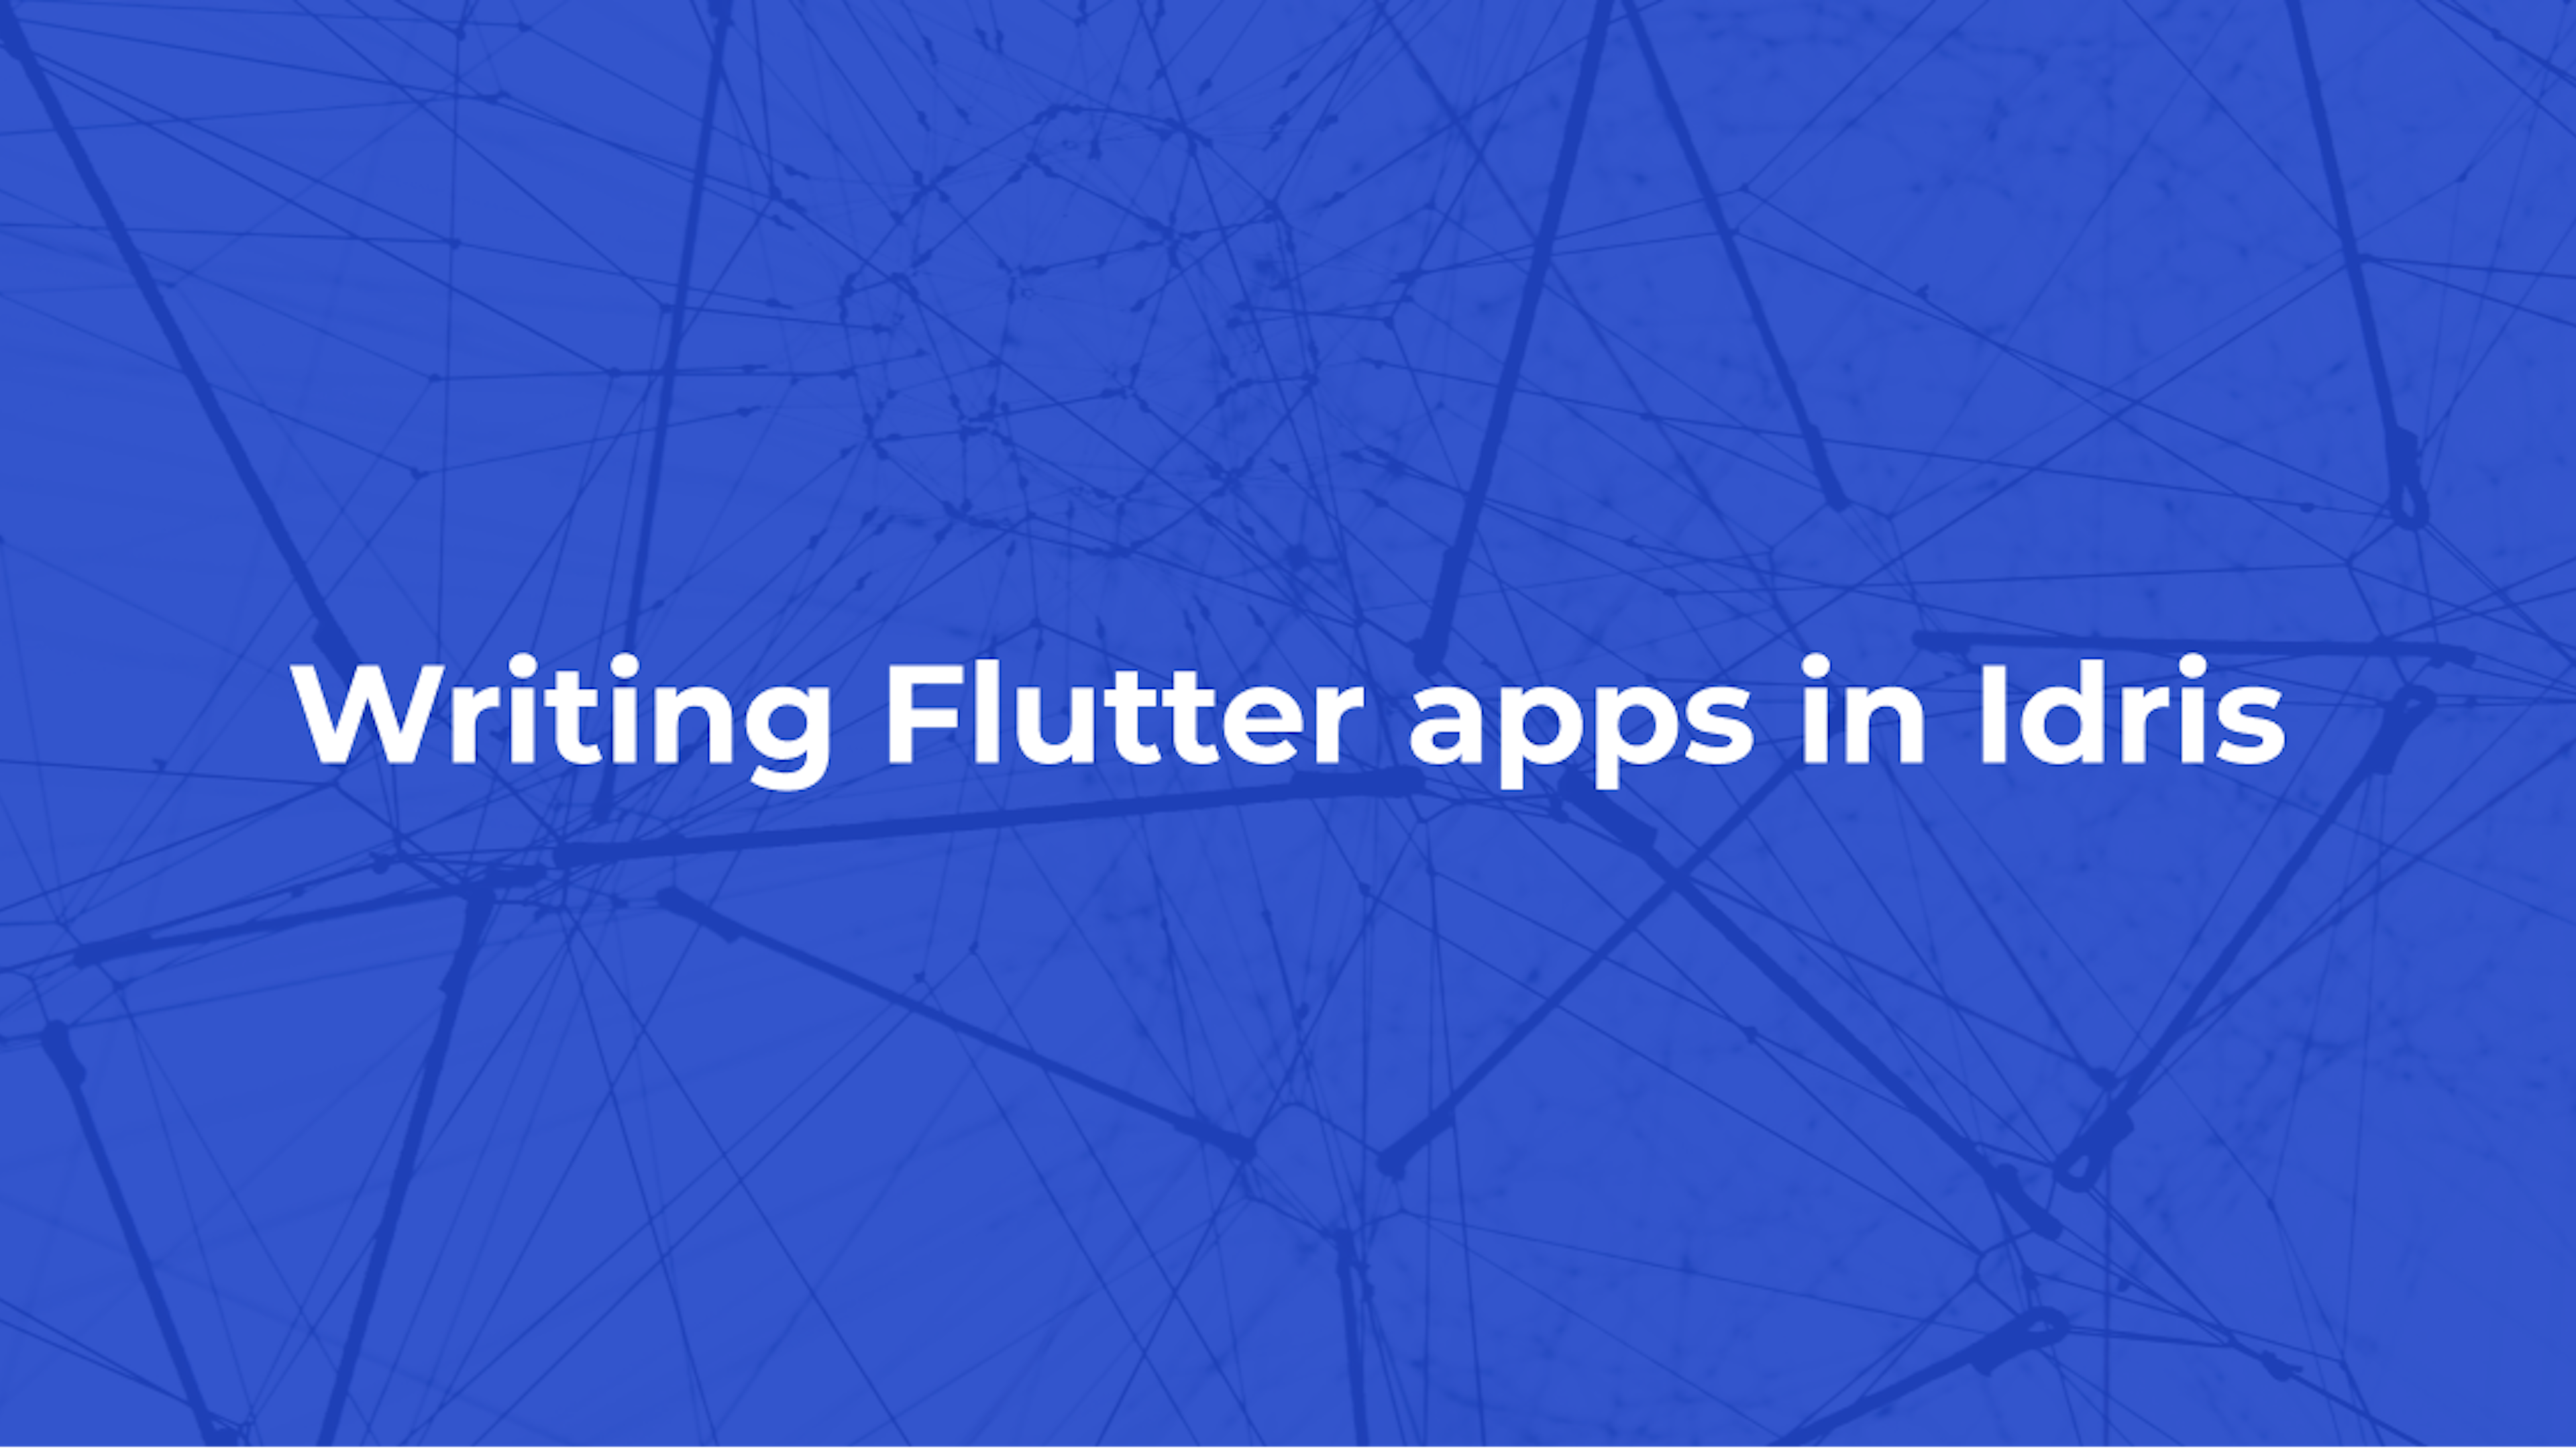 Writing Flutter apps in Idris